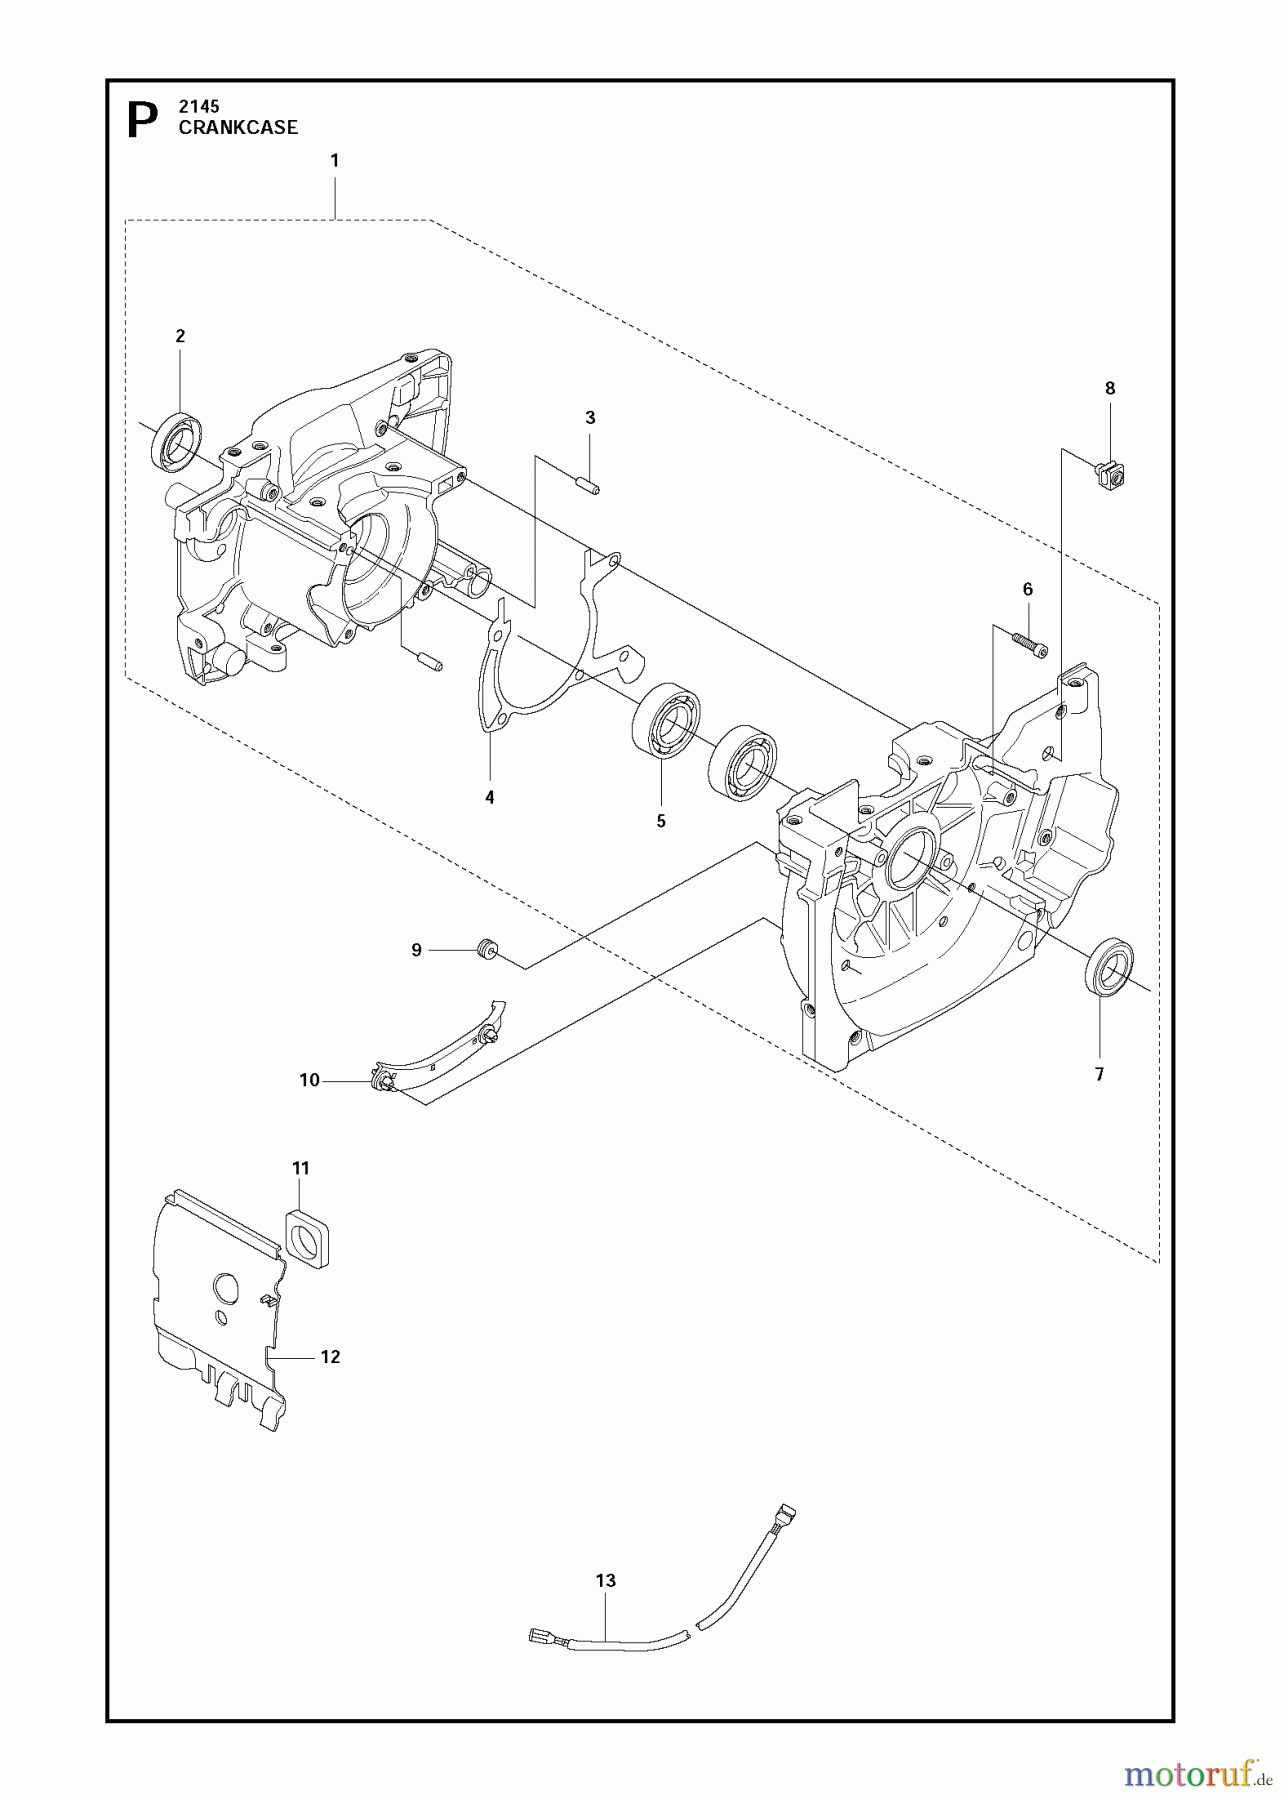  Jonsered Motorsensen, Trimmer CC2145 - Jonsered String/Brush Trimmer (2011-02) CRANKCASE